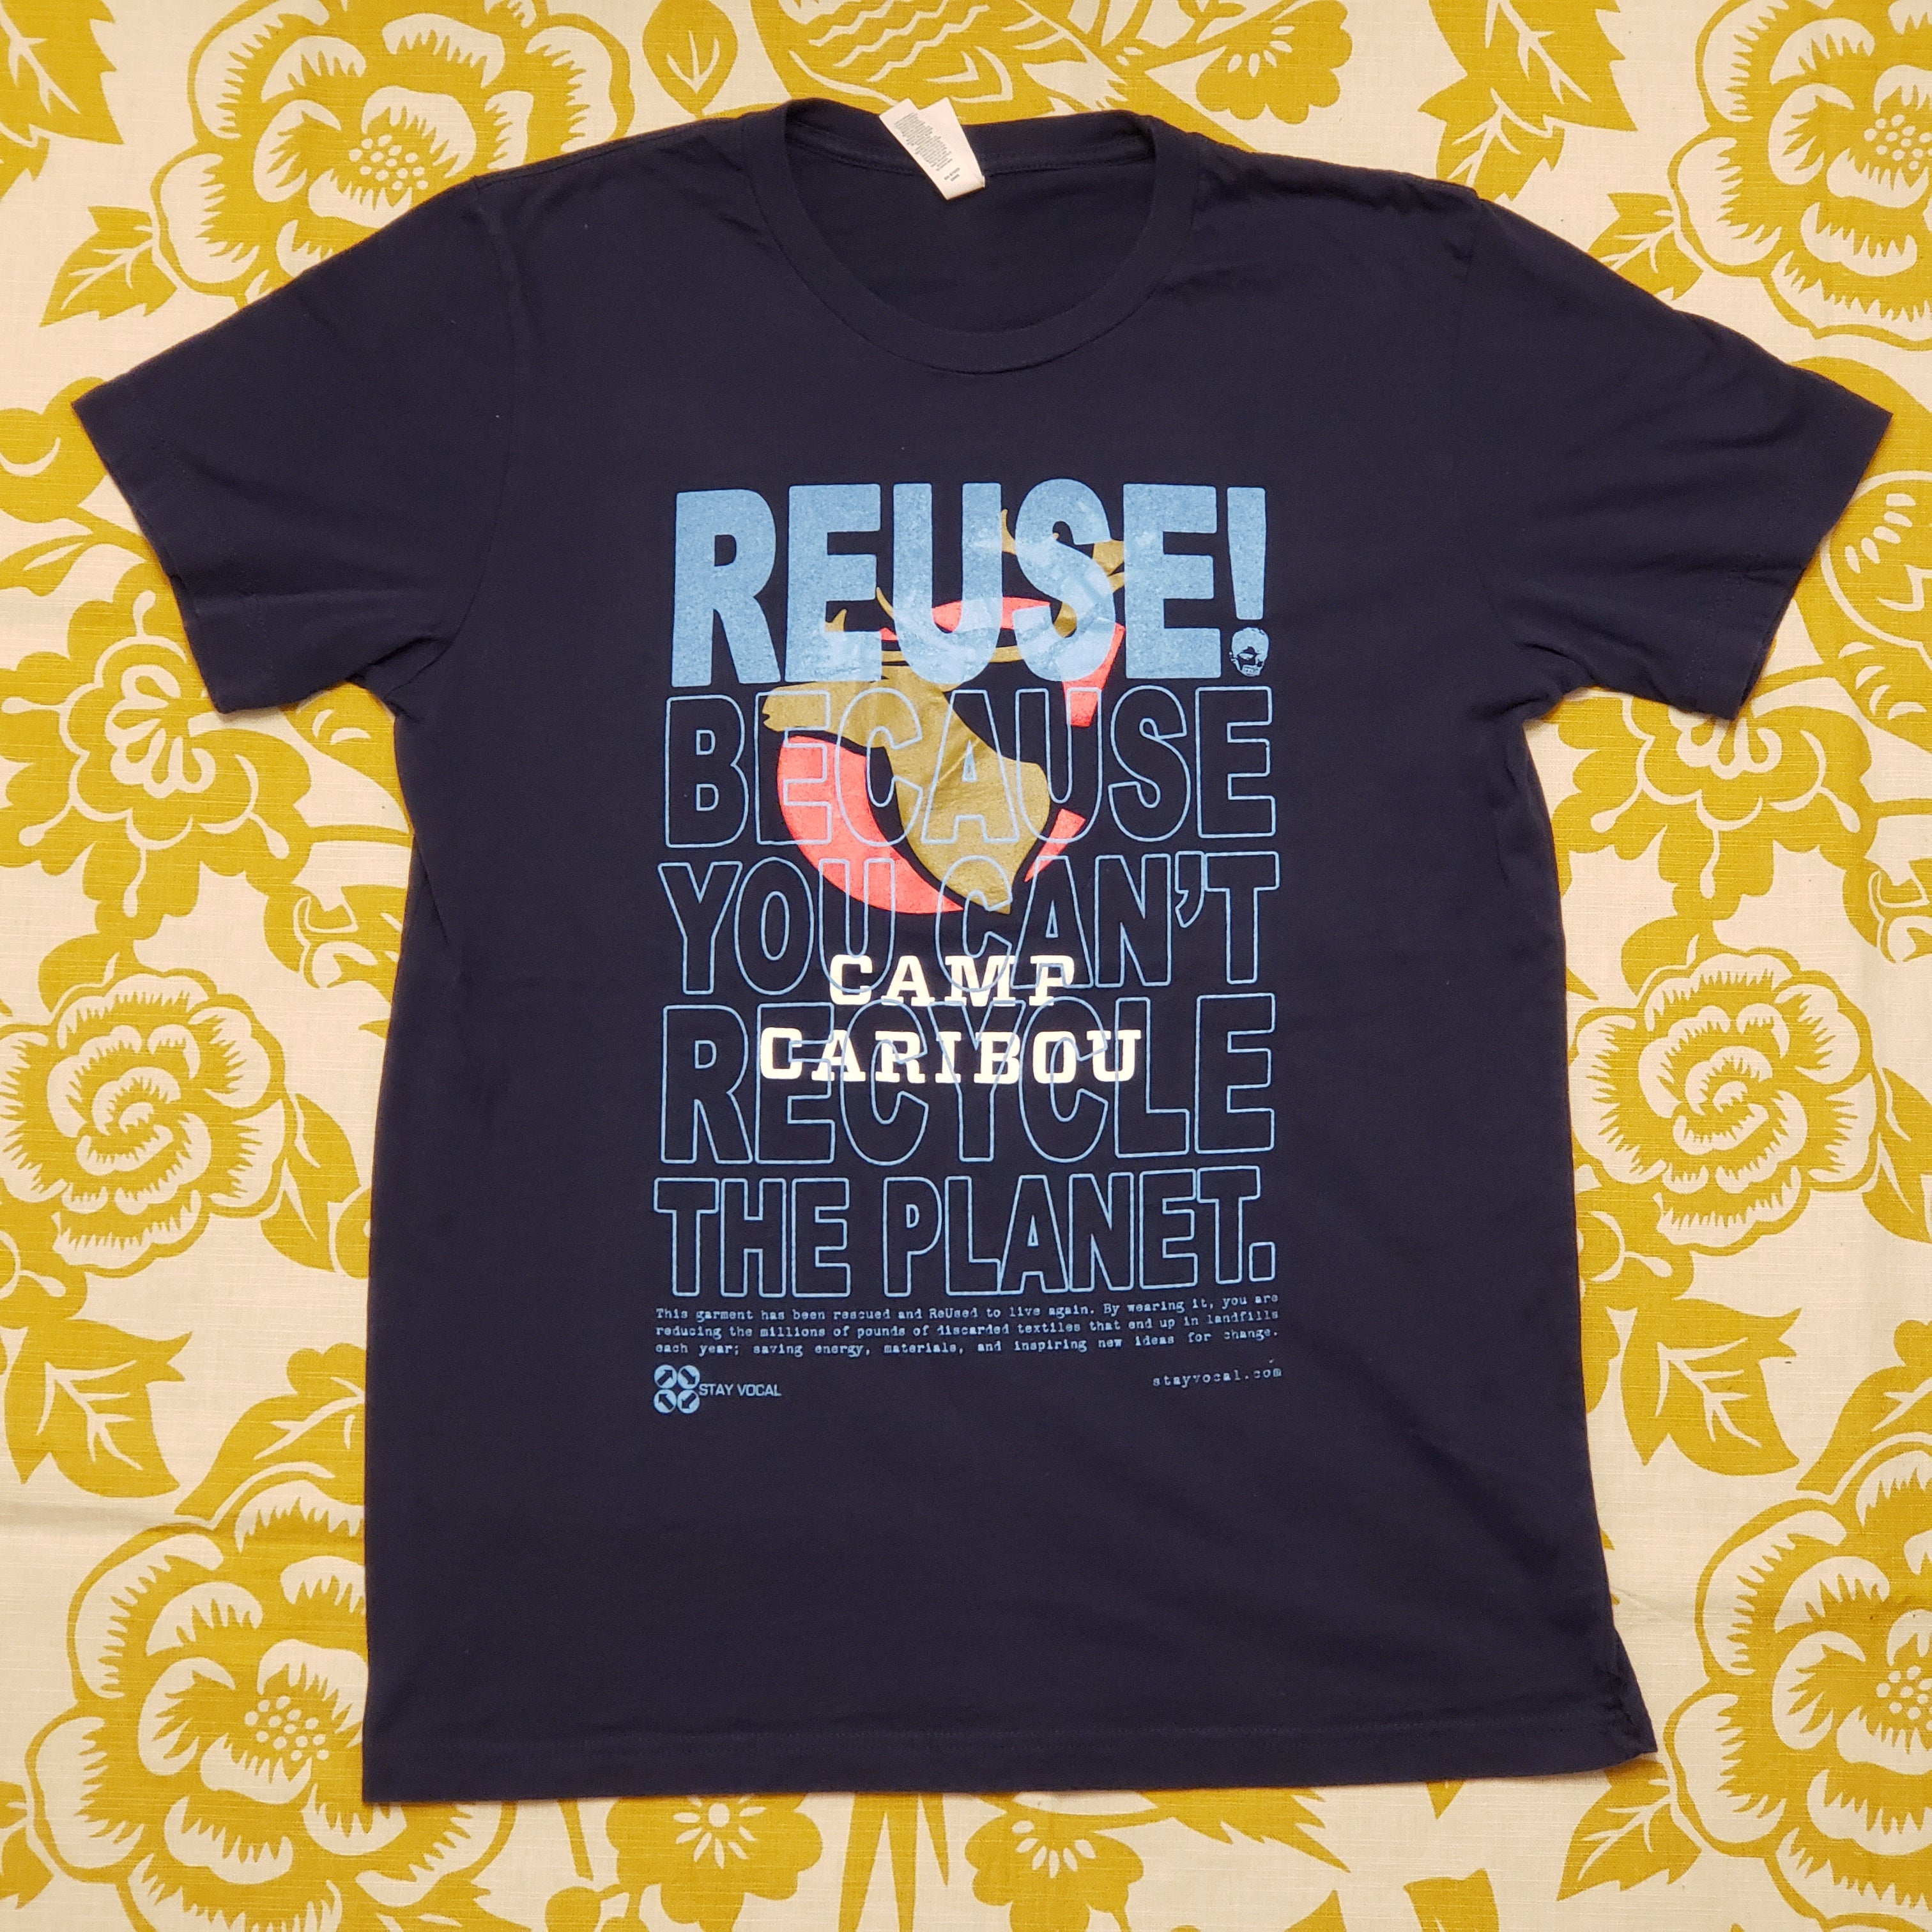 One of a Kind (Men's M) REUSE! Camp Caribou T-Shirt